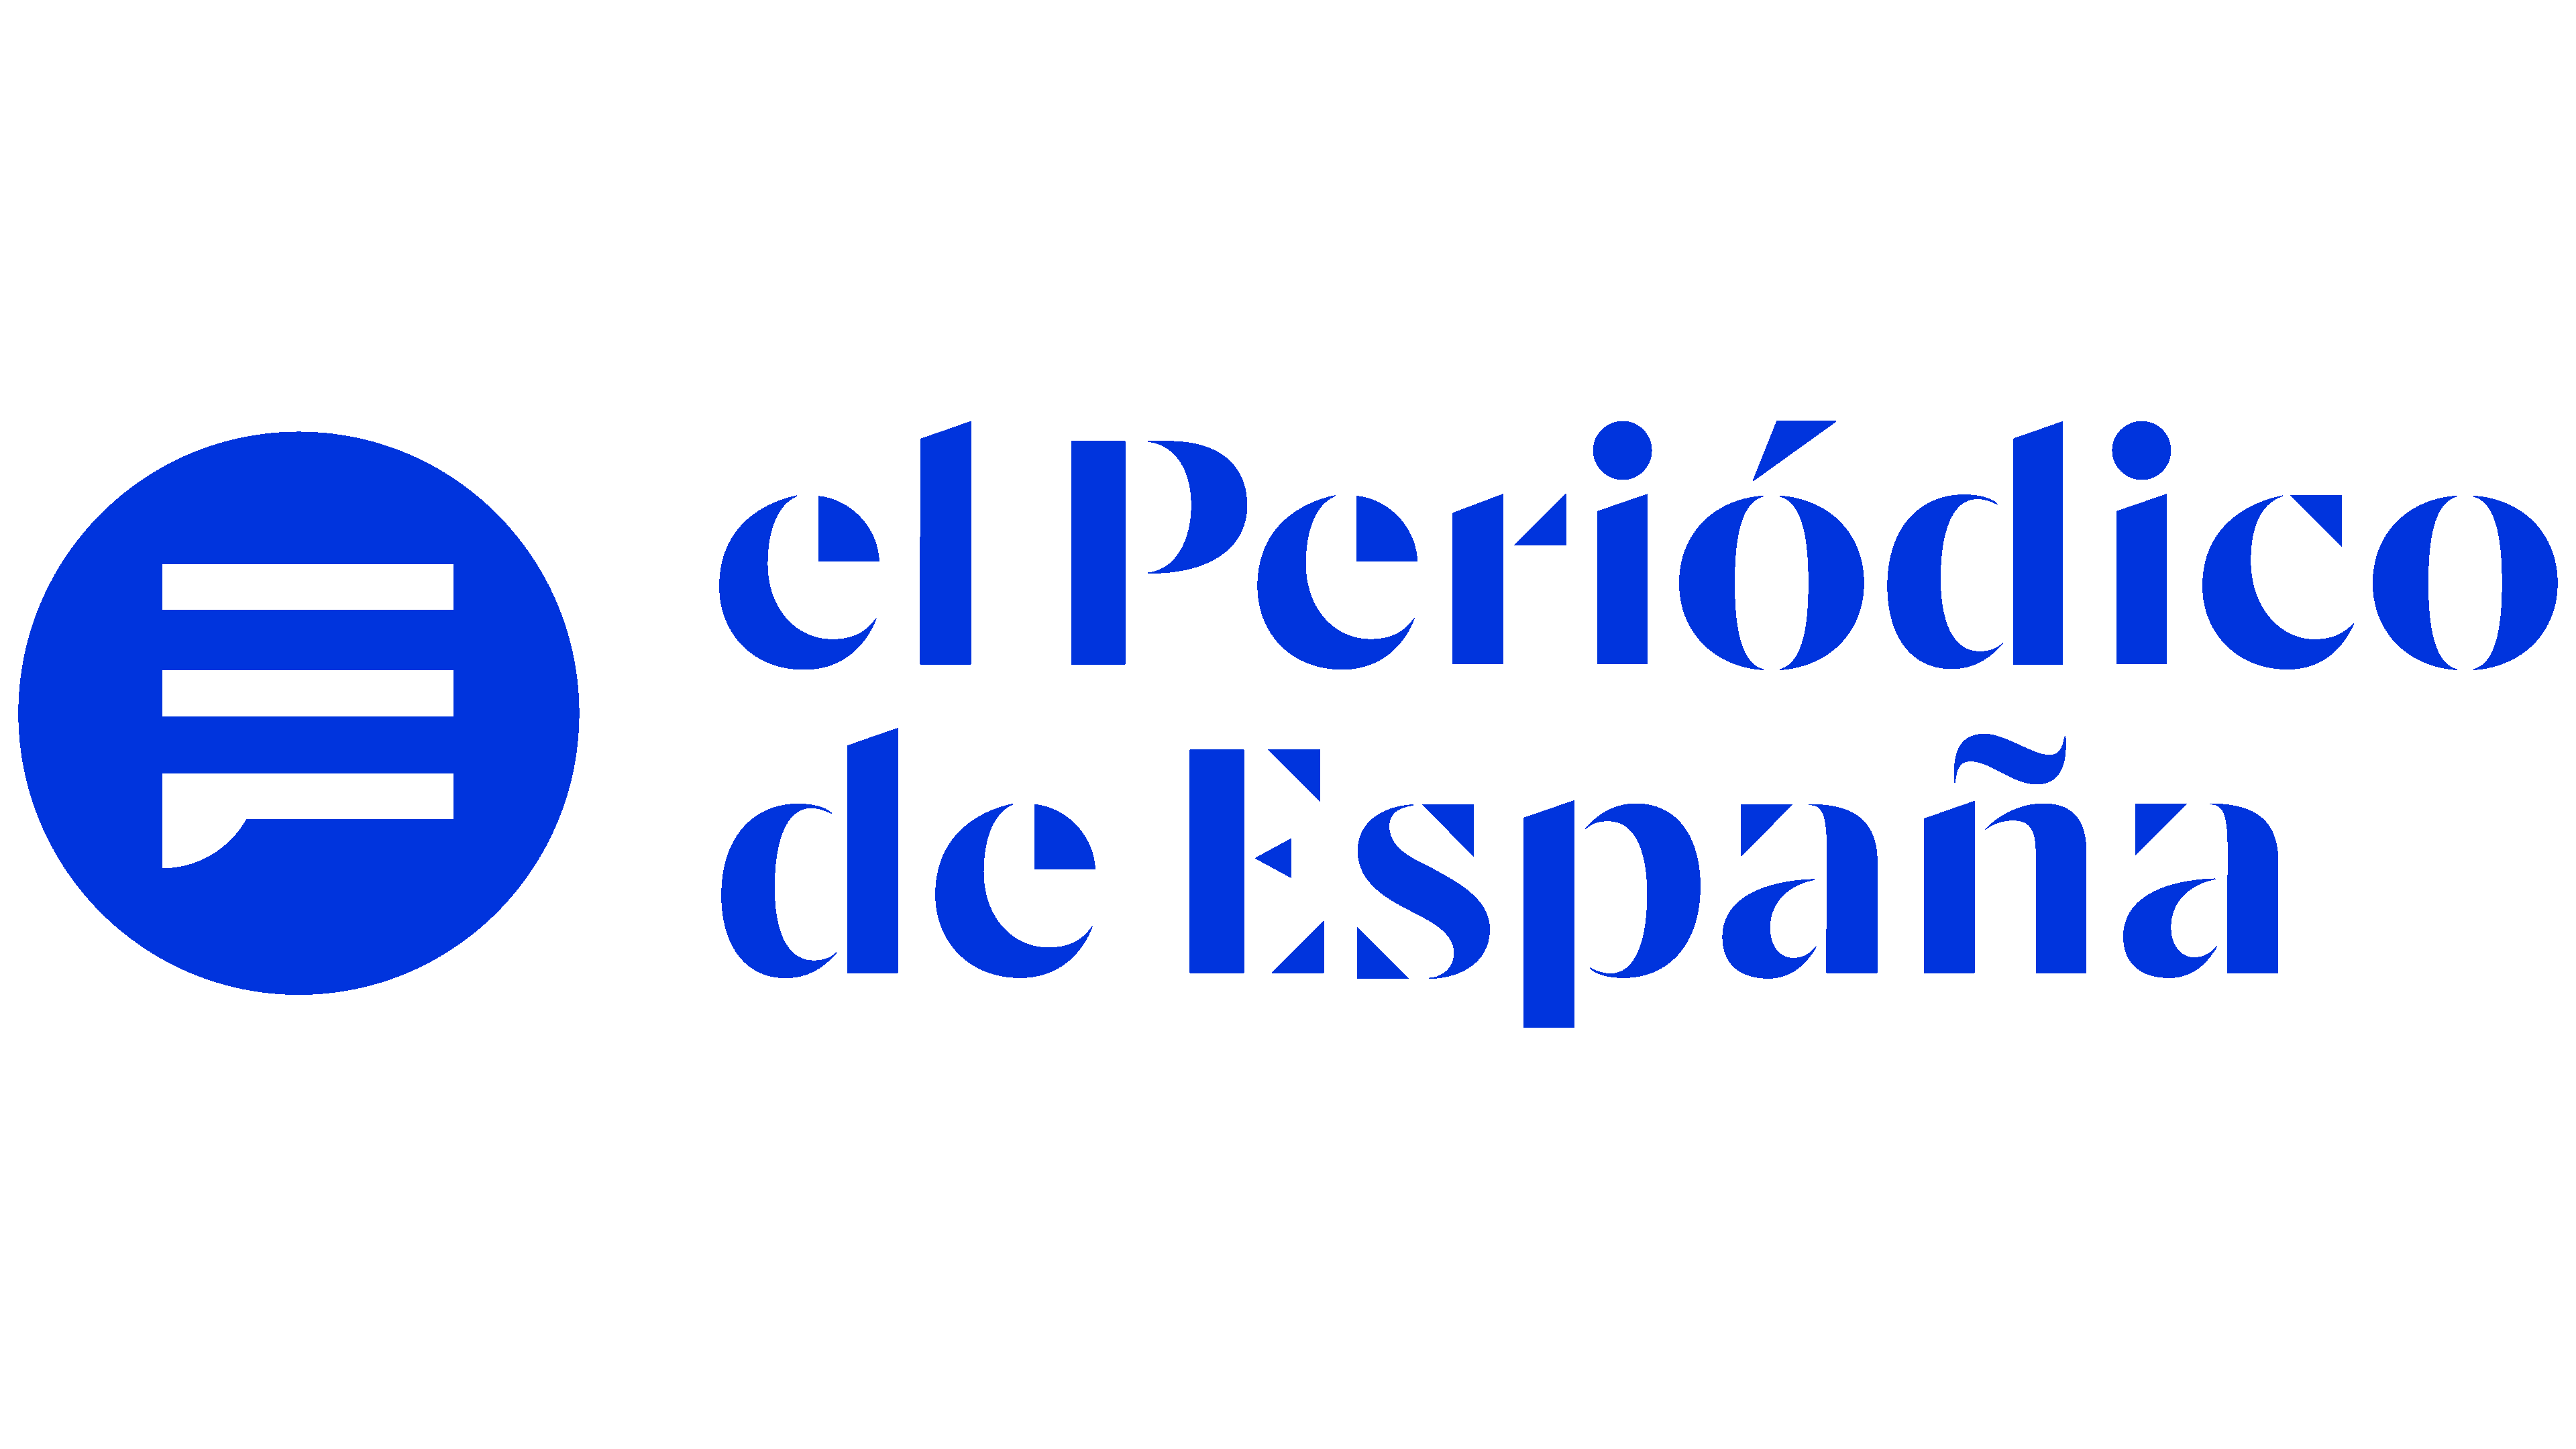 The clarity and precision of El Periodico de Espana's design